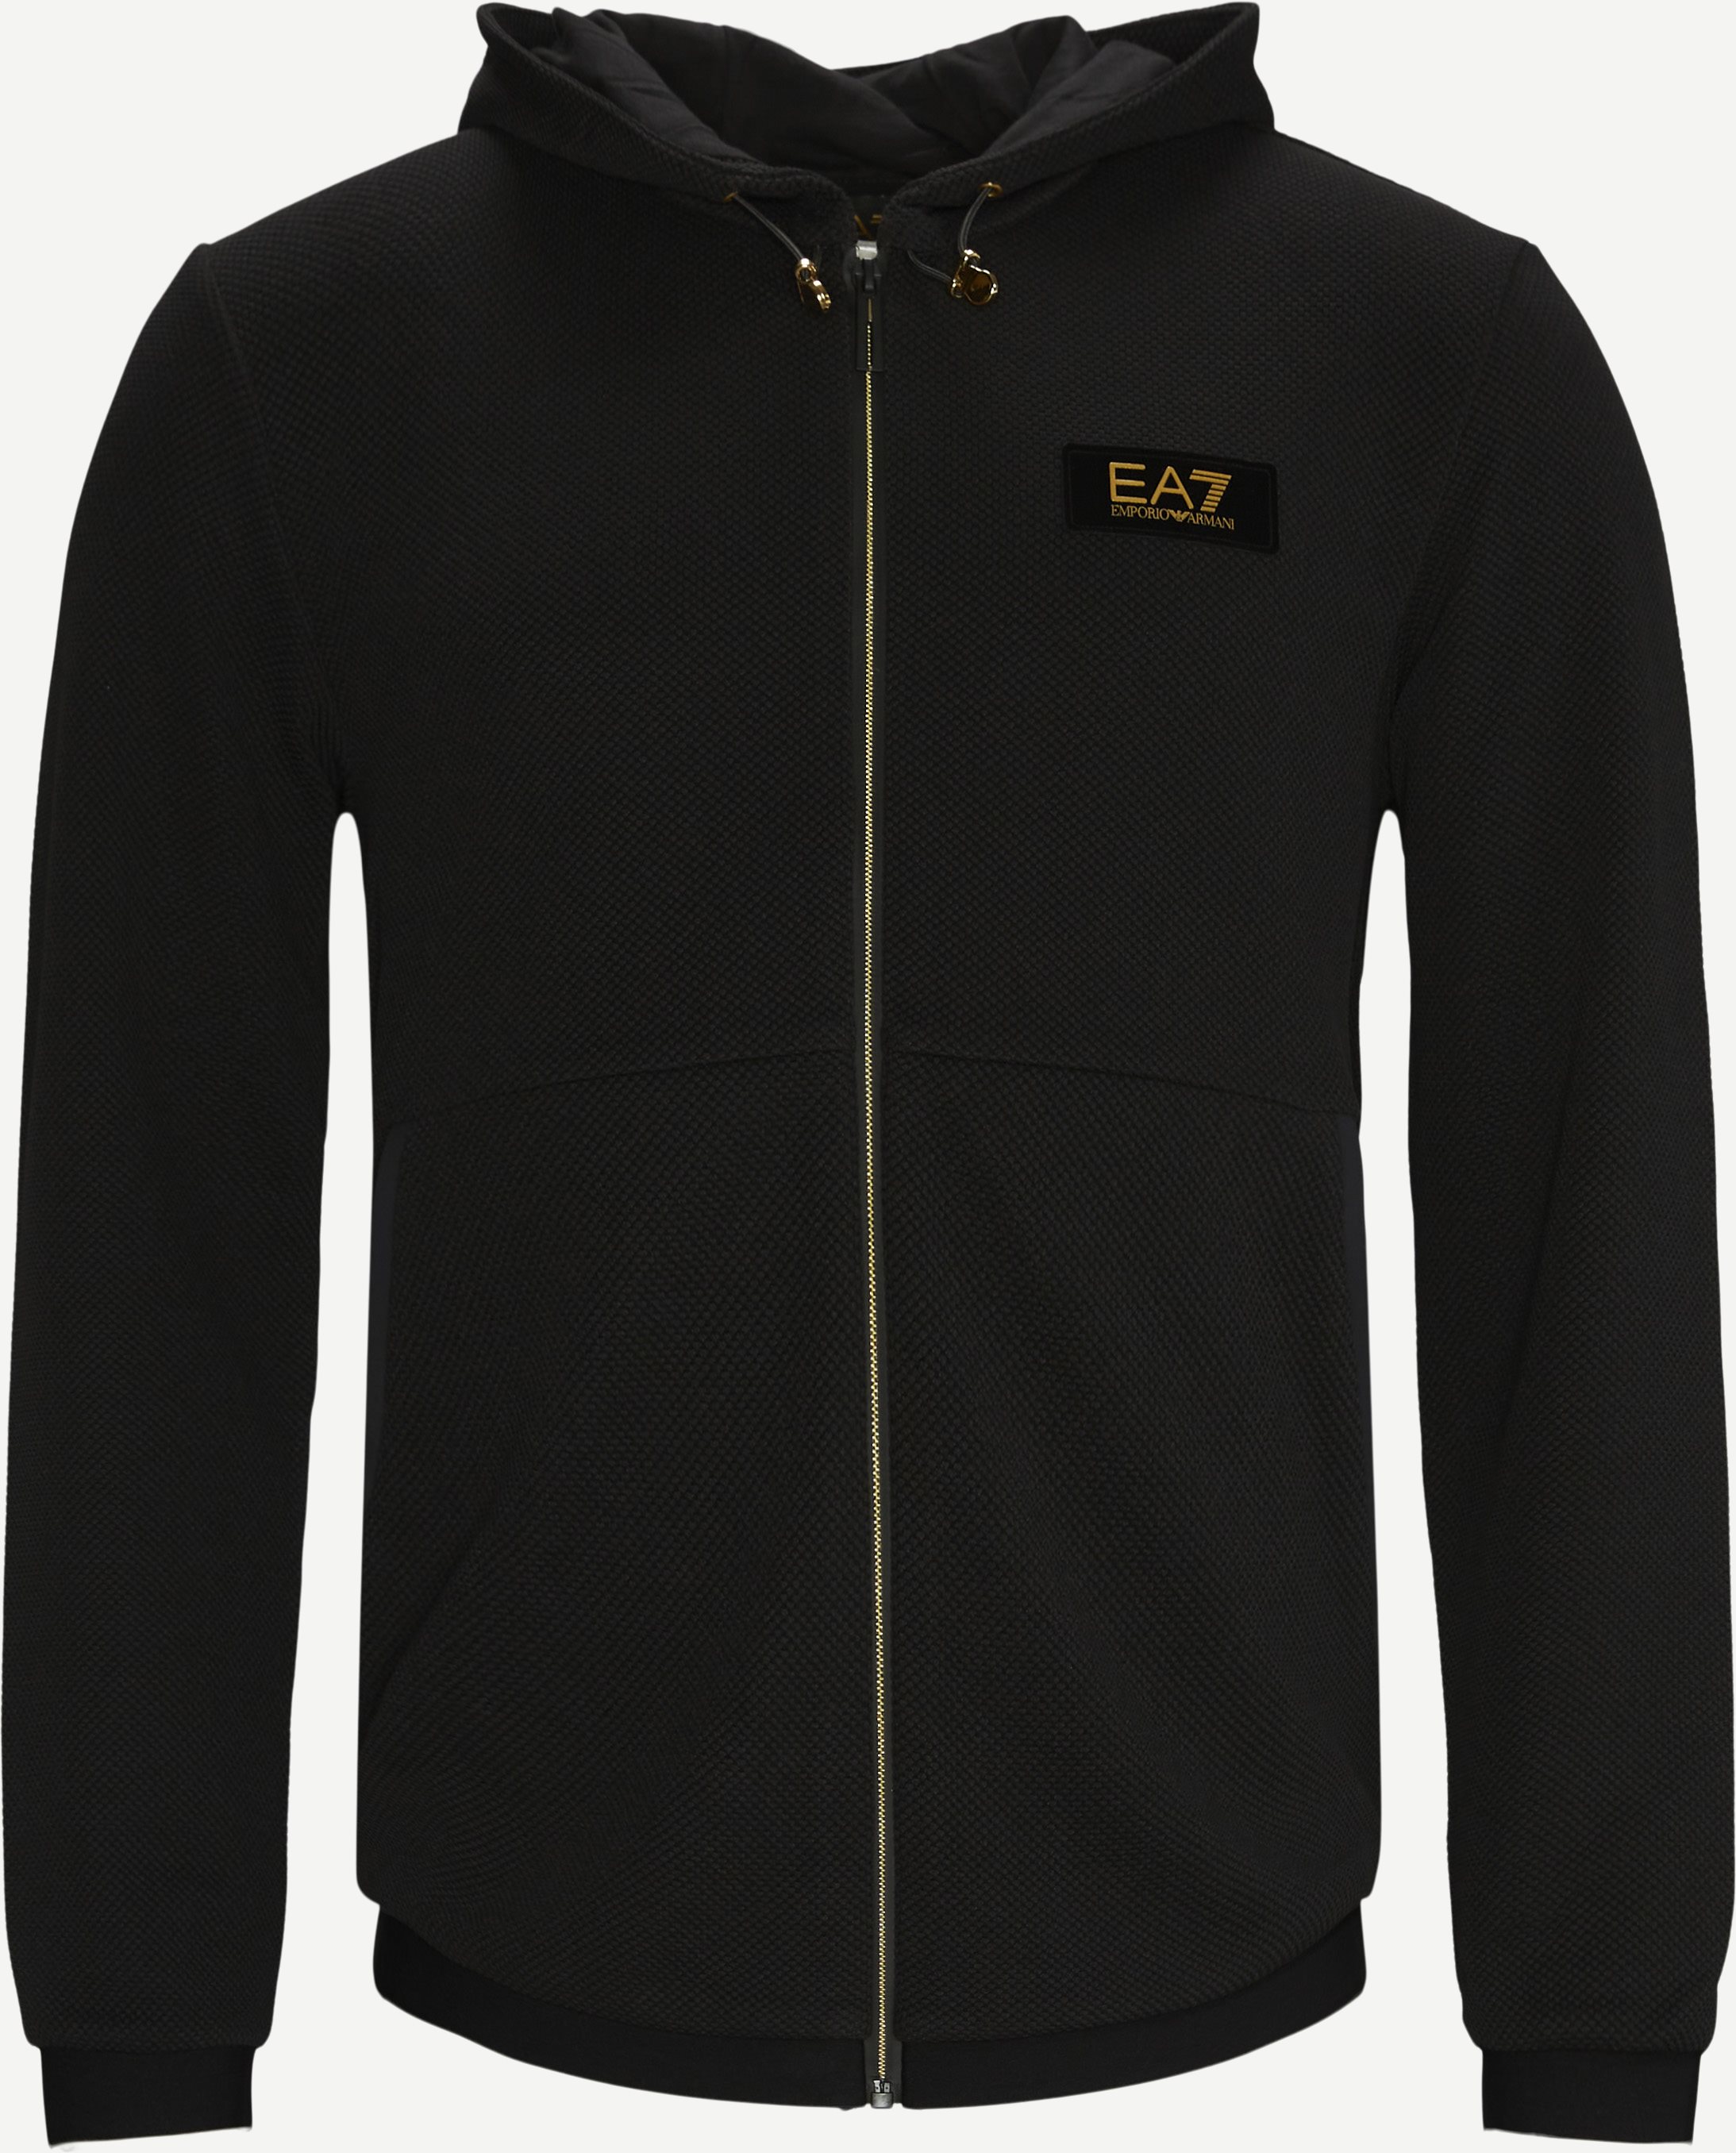 6KPM44 Hooded Zip Sweatshirt - Sweatshirts - Regular fit - Black